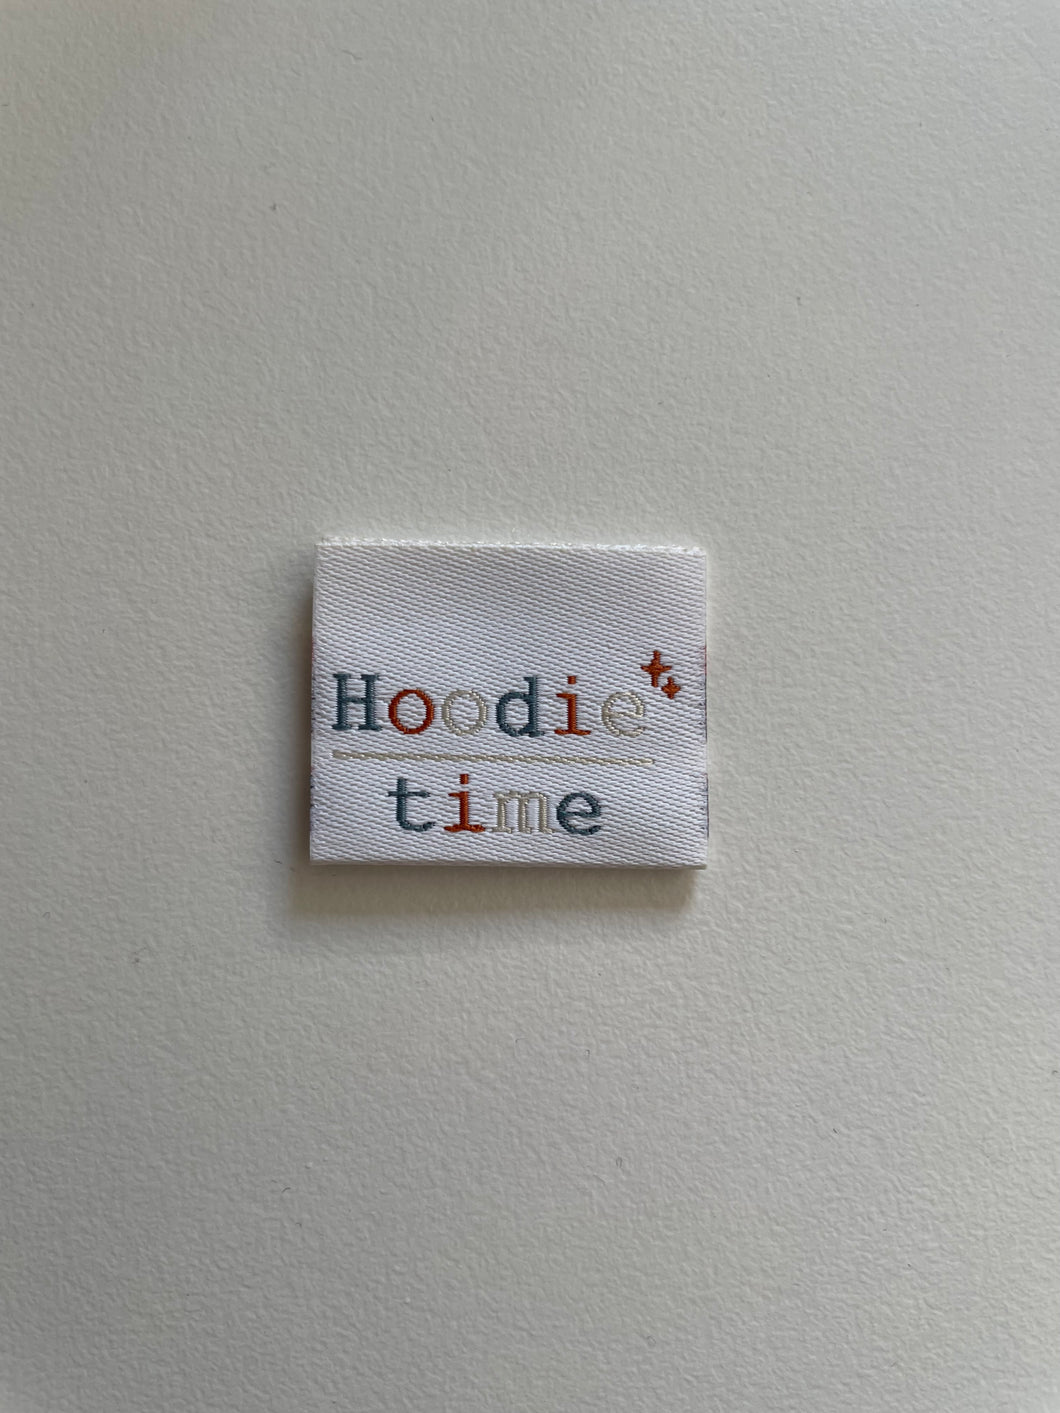 Hoodie Time Label